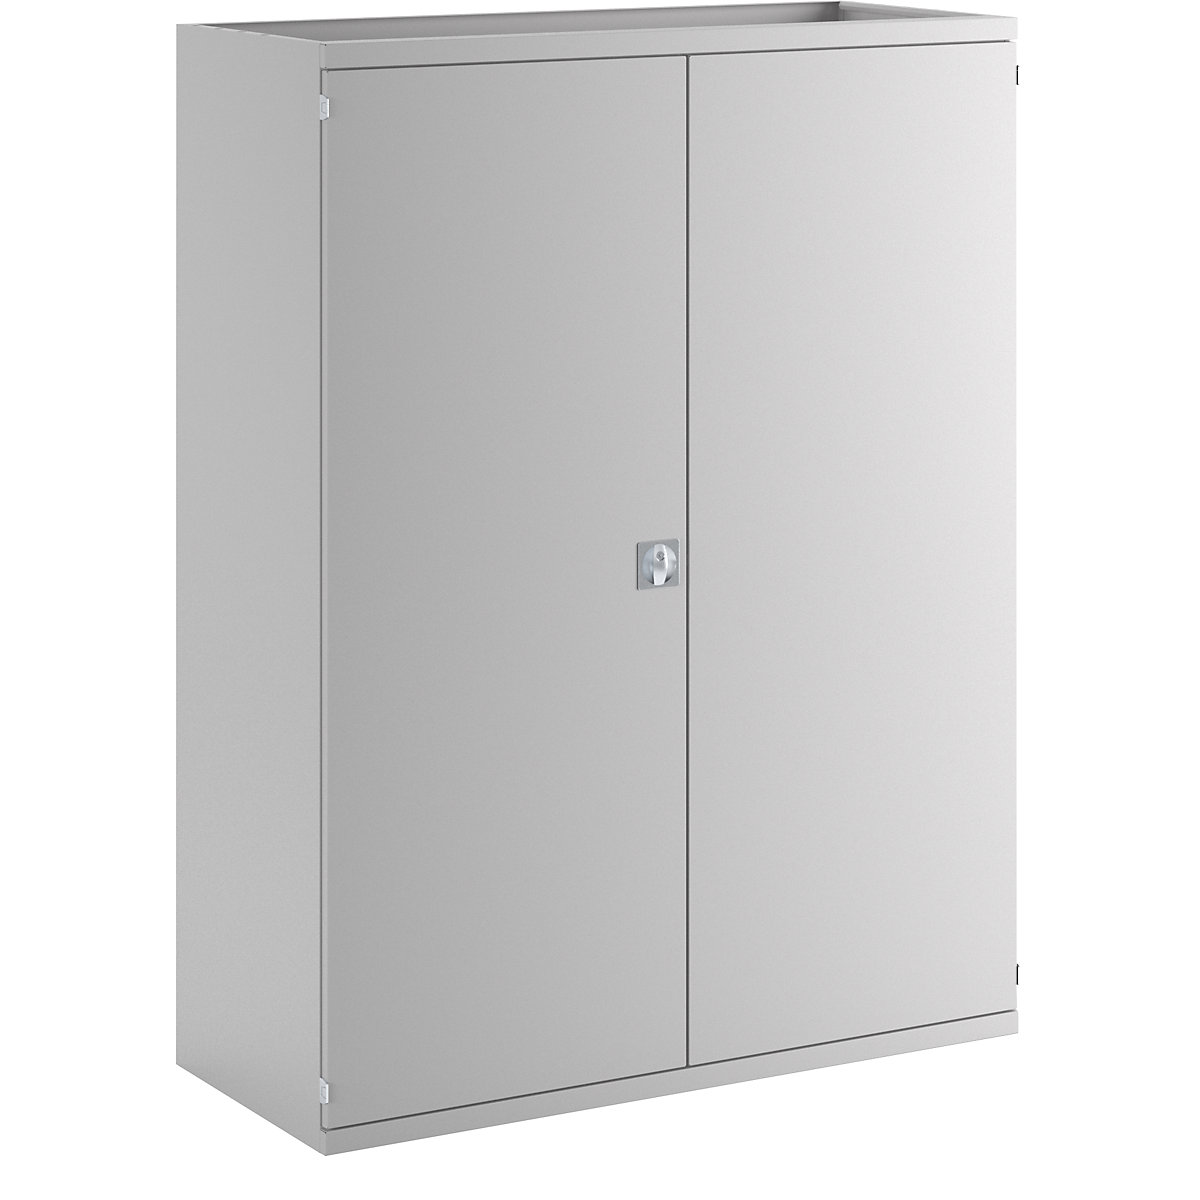 JUMBO heavy duty cupboard made of sheet steel – eurokraft pro, 6 shelves, drawers 2 x 60 mm, 2 x 120 mm, 2 x 180 mm high, light grey / light grey-3